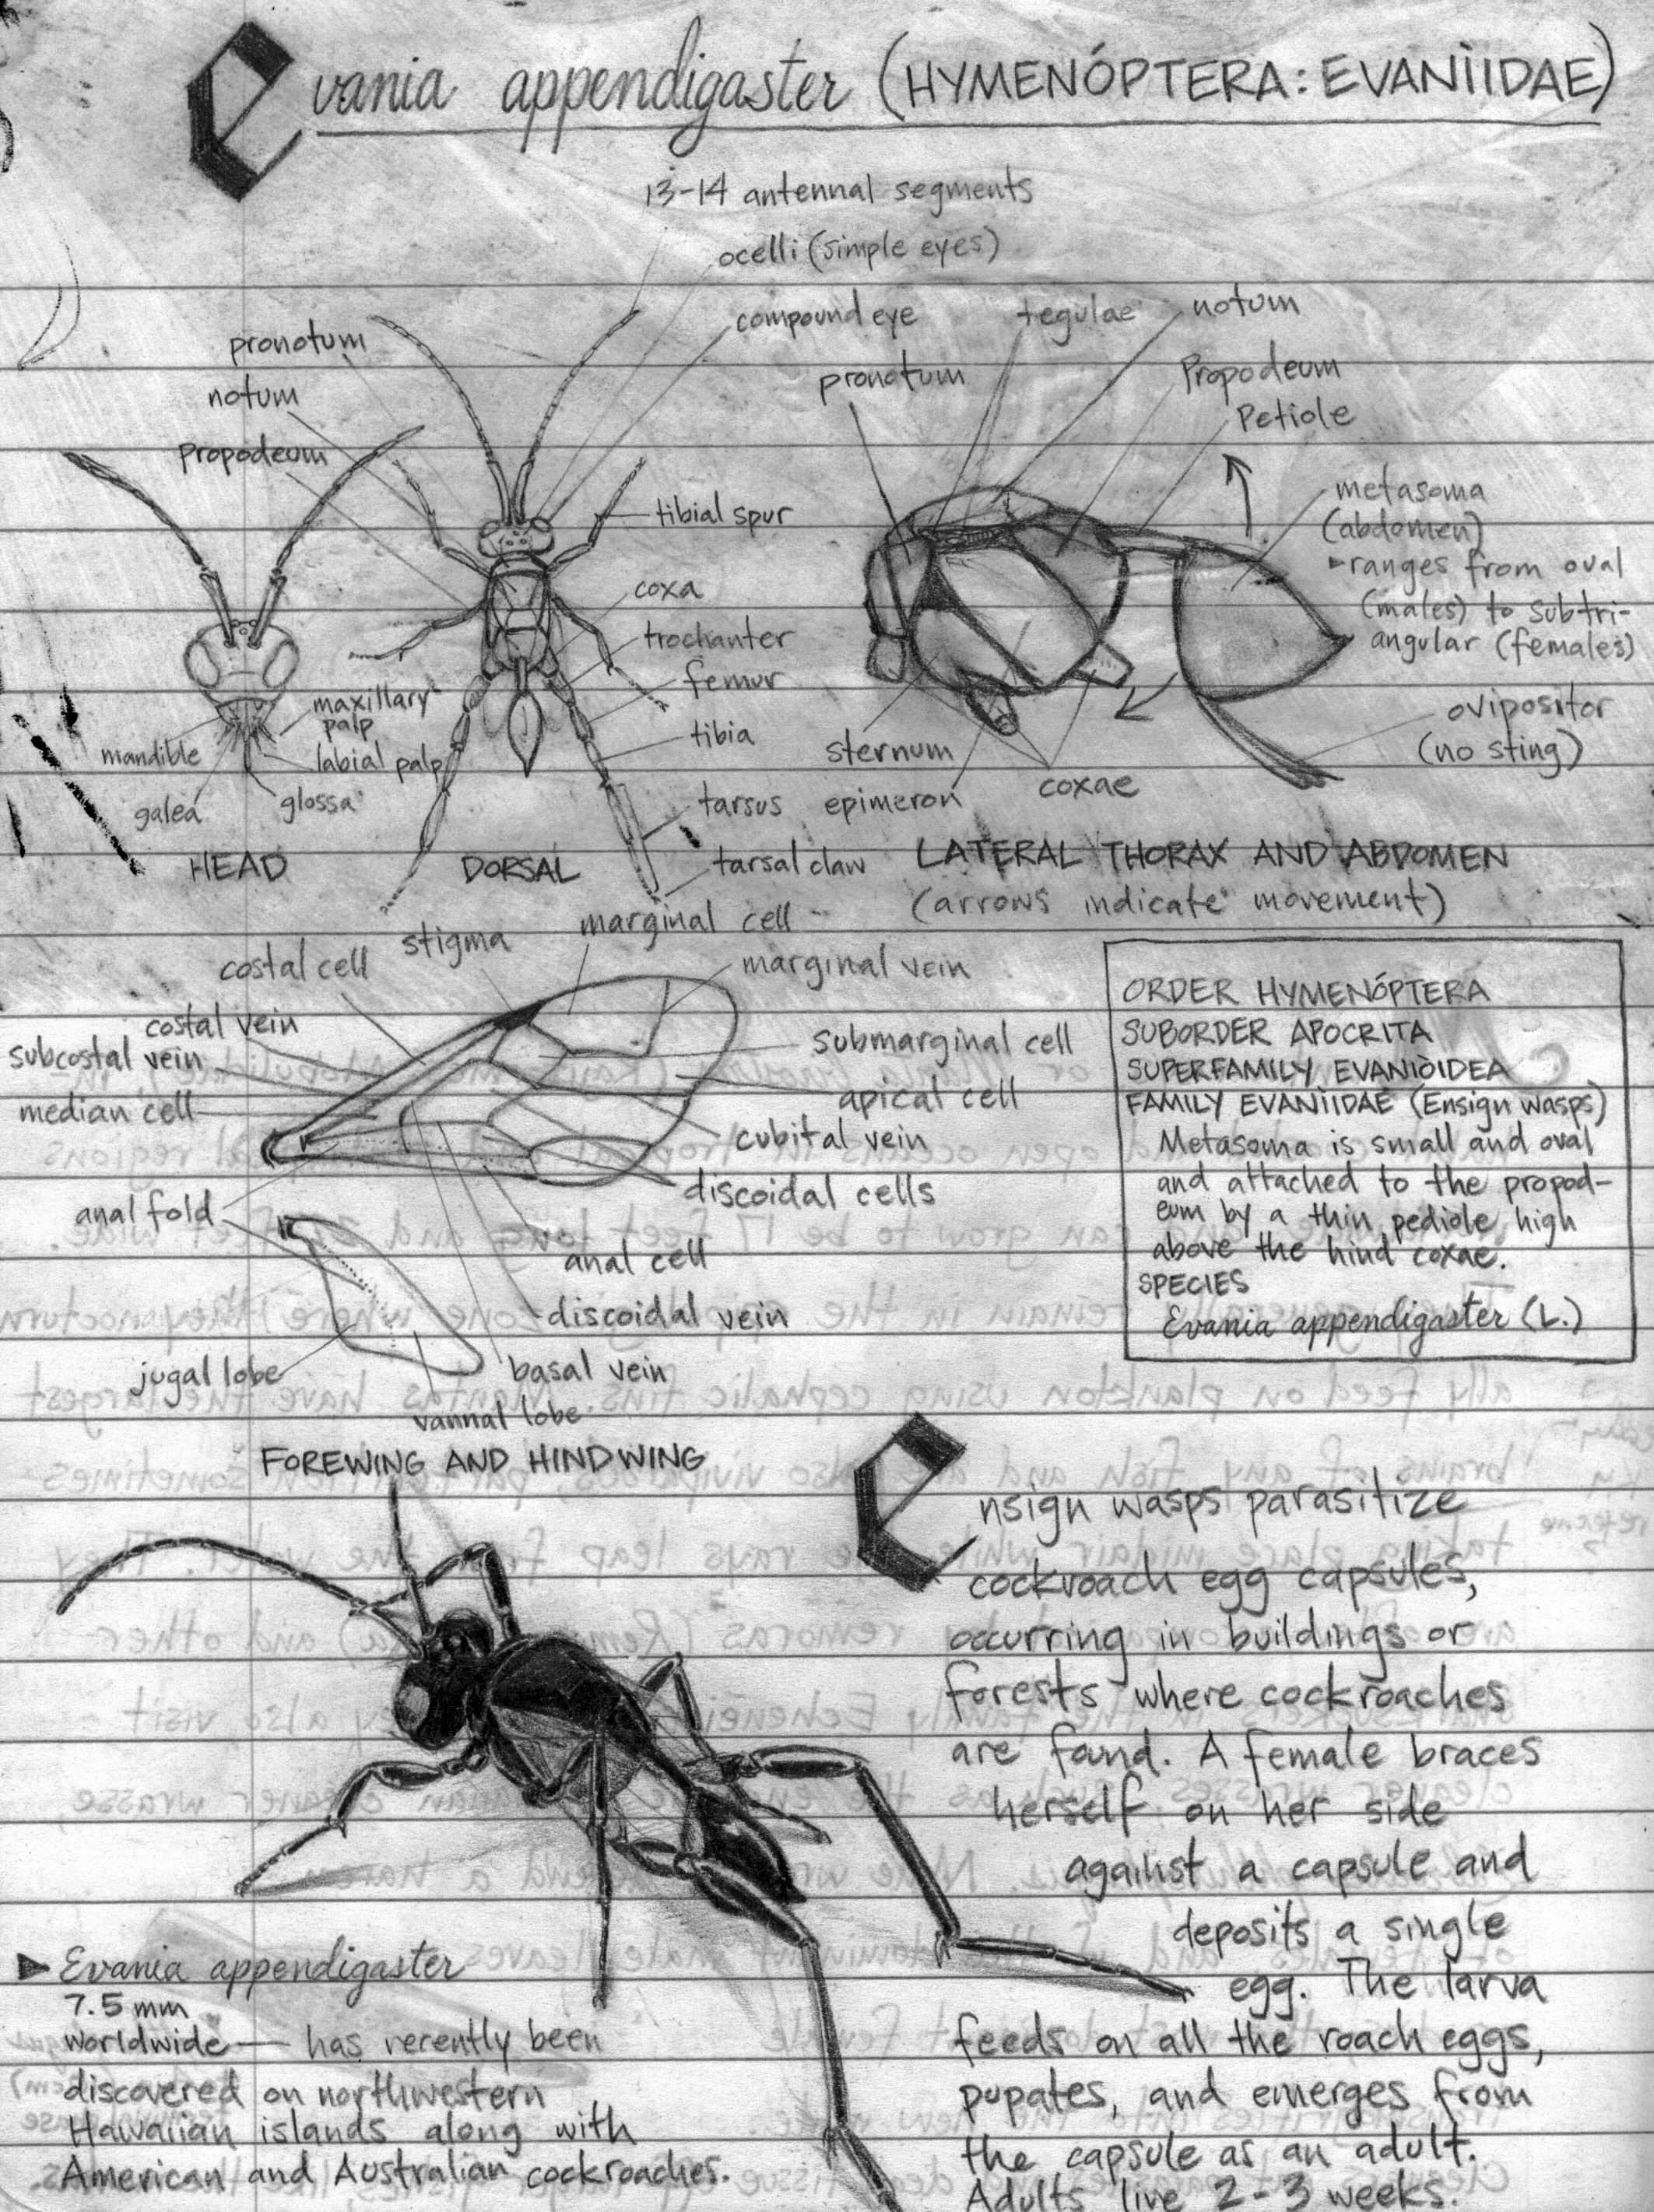 Evania appendigaster Sketches.JPG